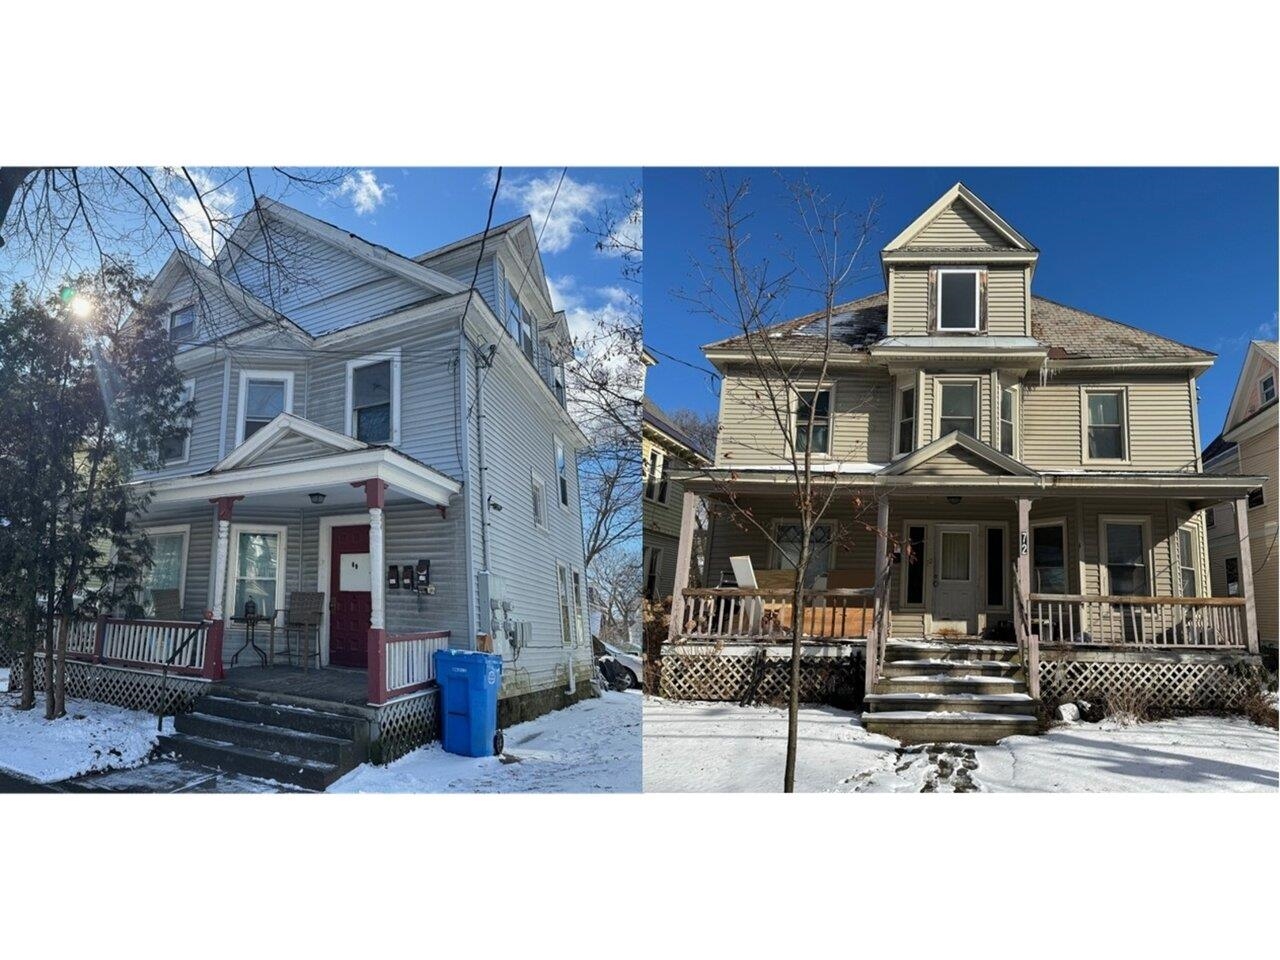 Sold property in Burlington